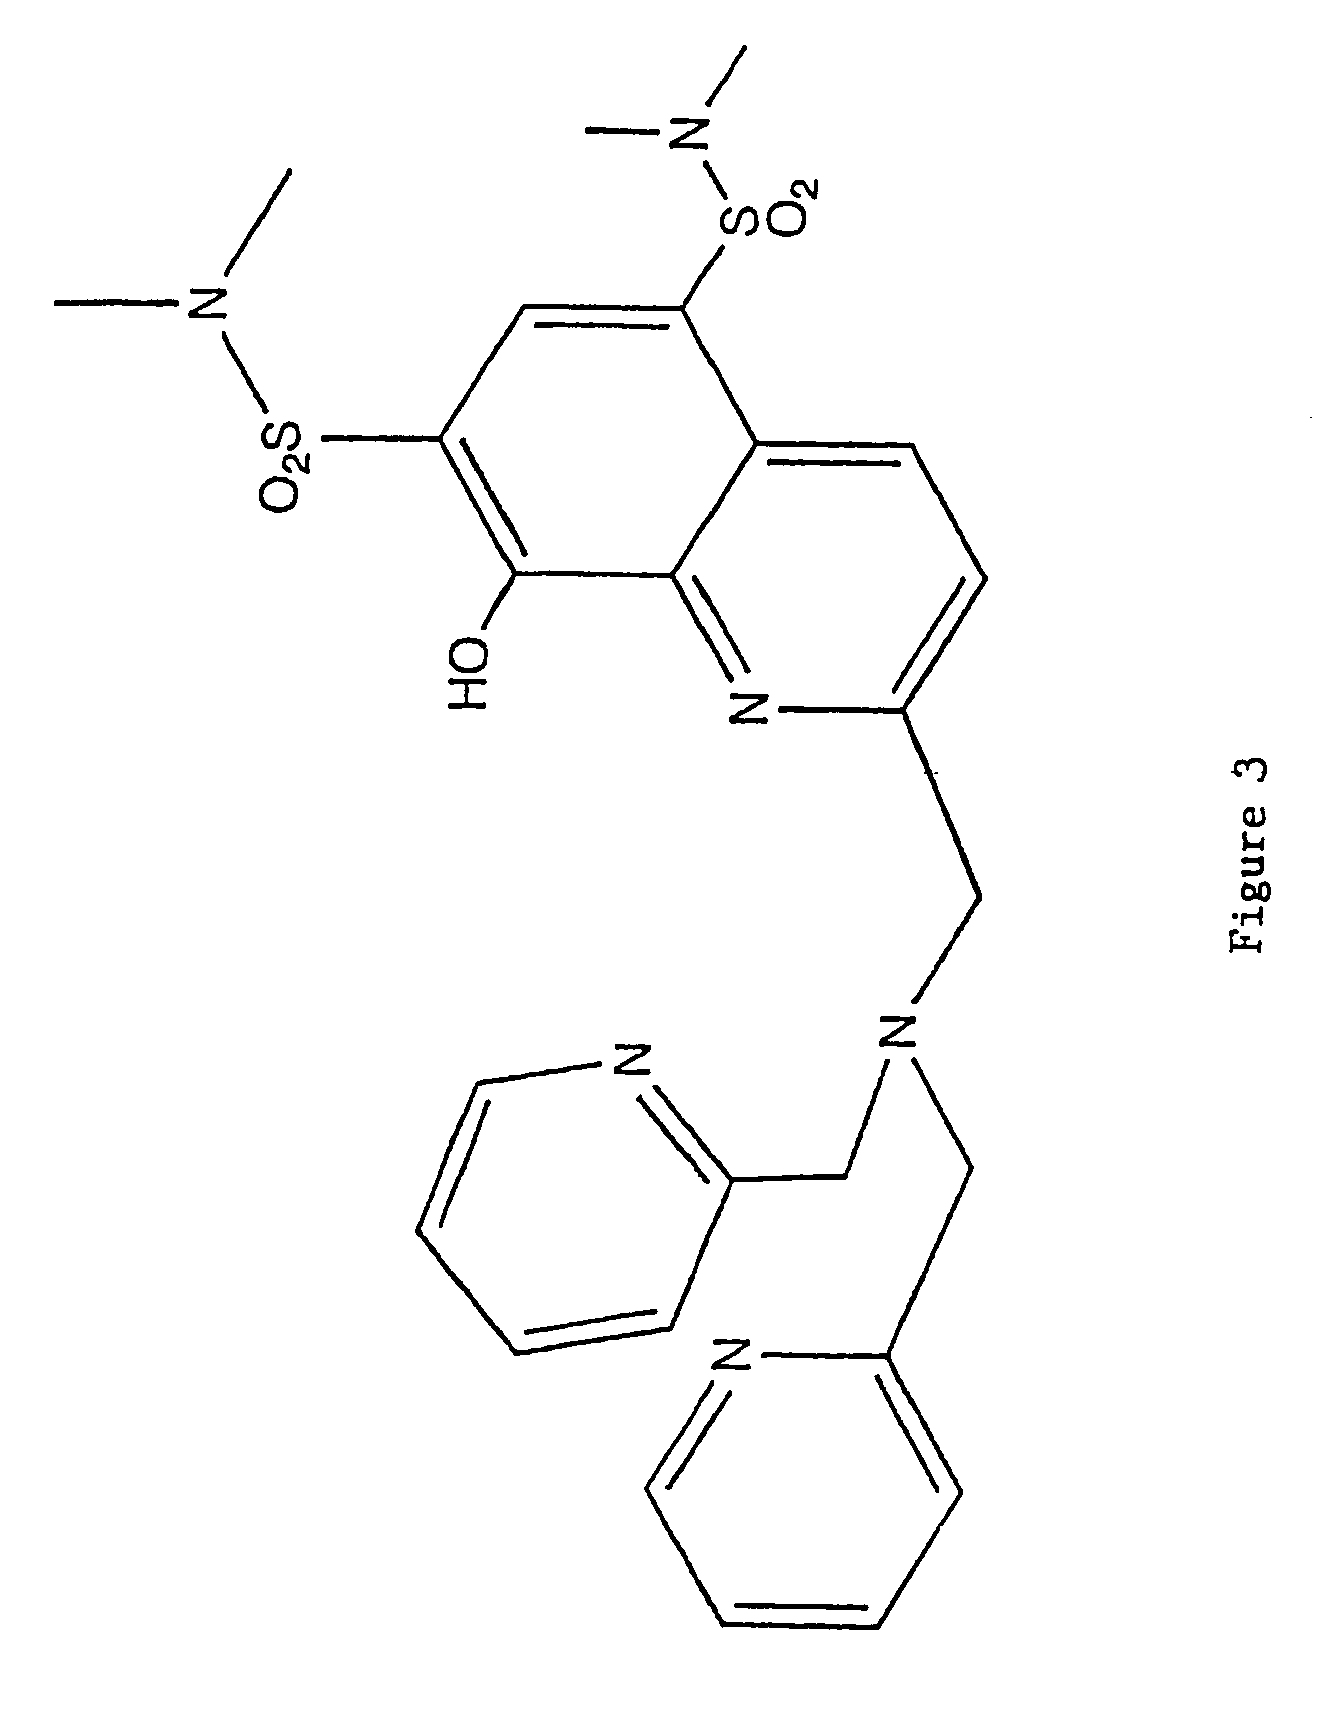 8-hydroxyquinoline tripodal metal ion probes